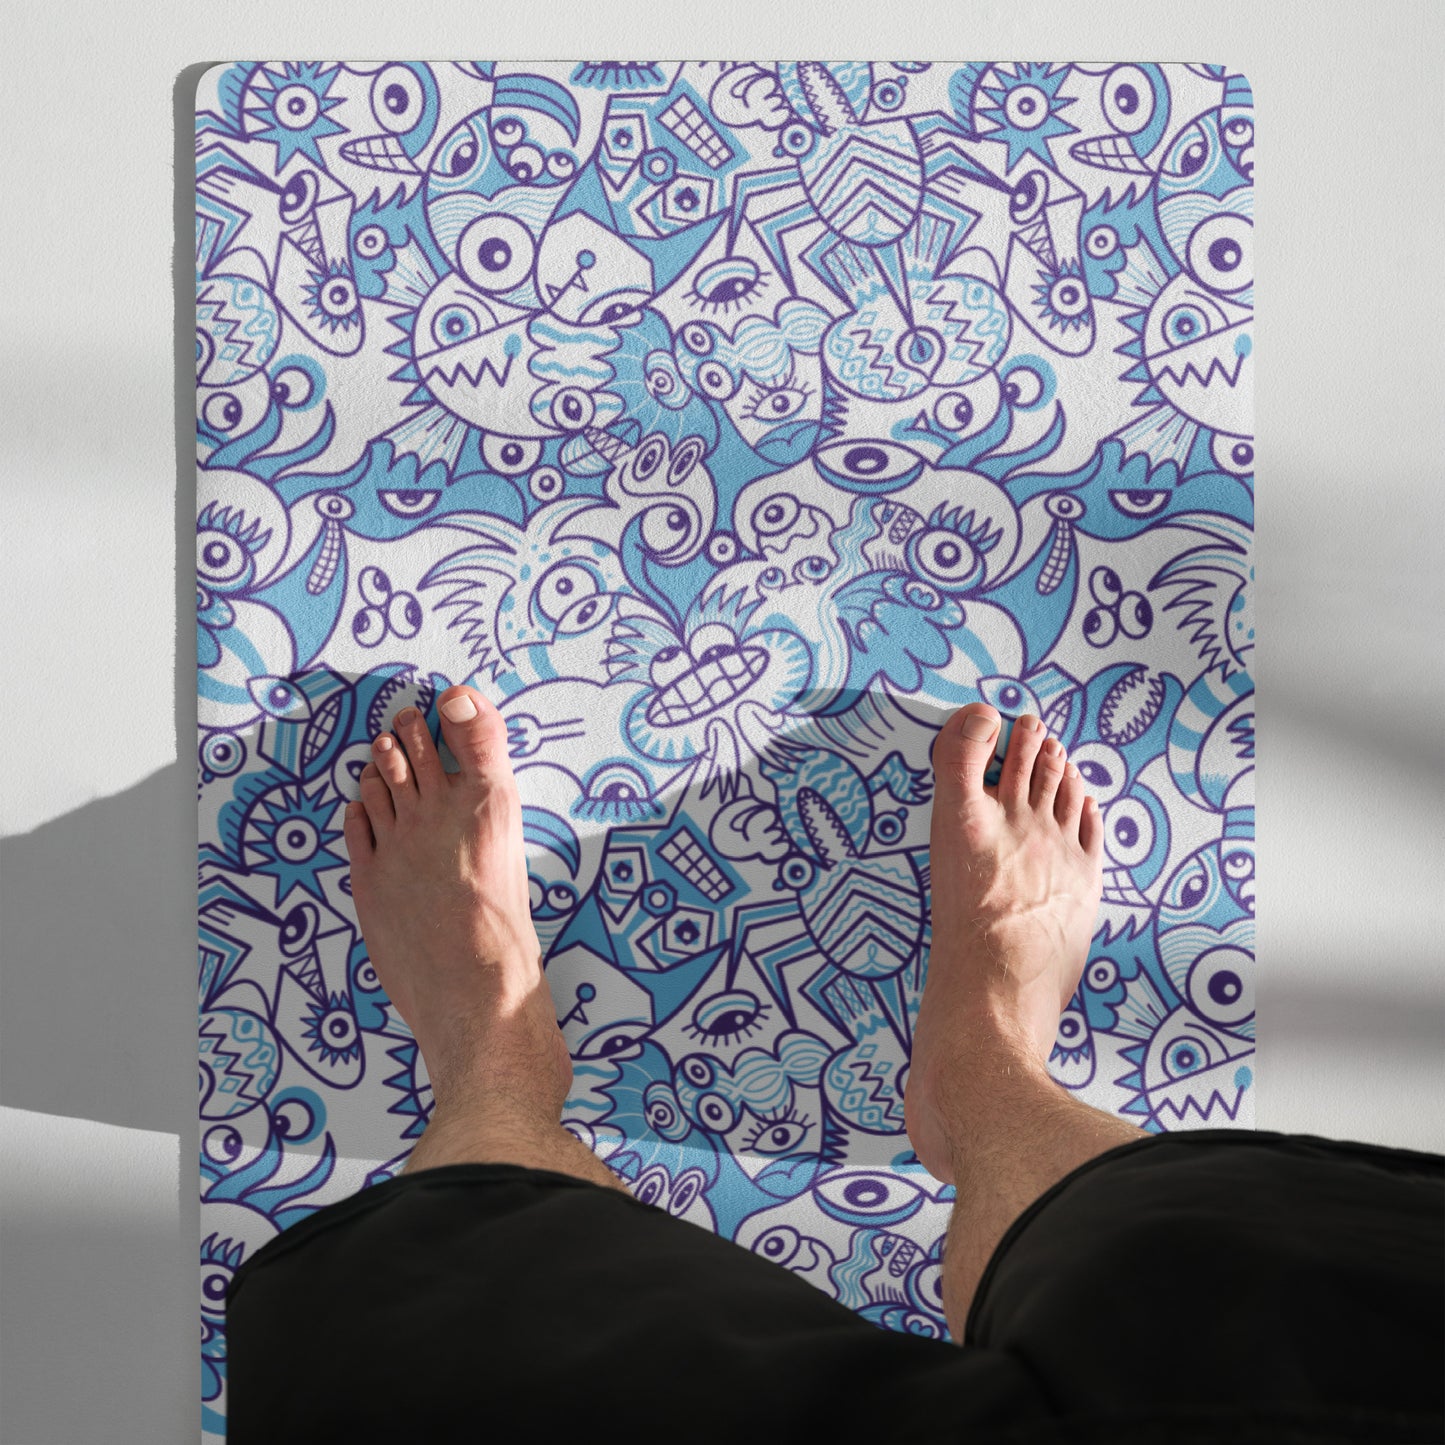 Whimsical Blue Doodle Critterscape pattern design Yoga mat. Product details. Top view